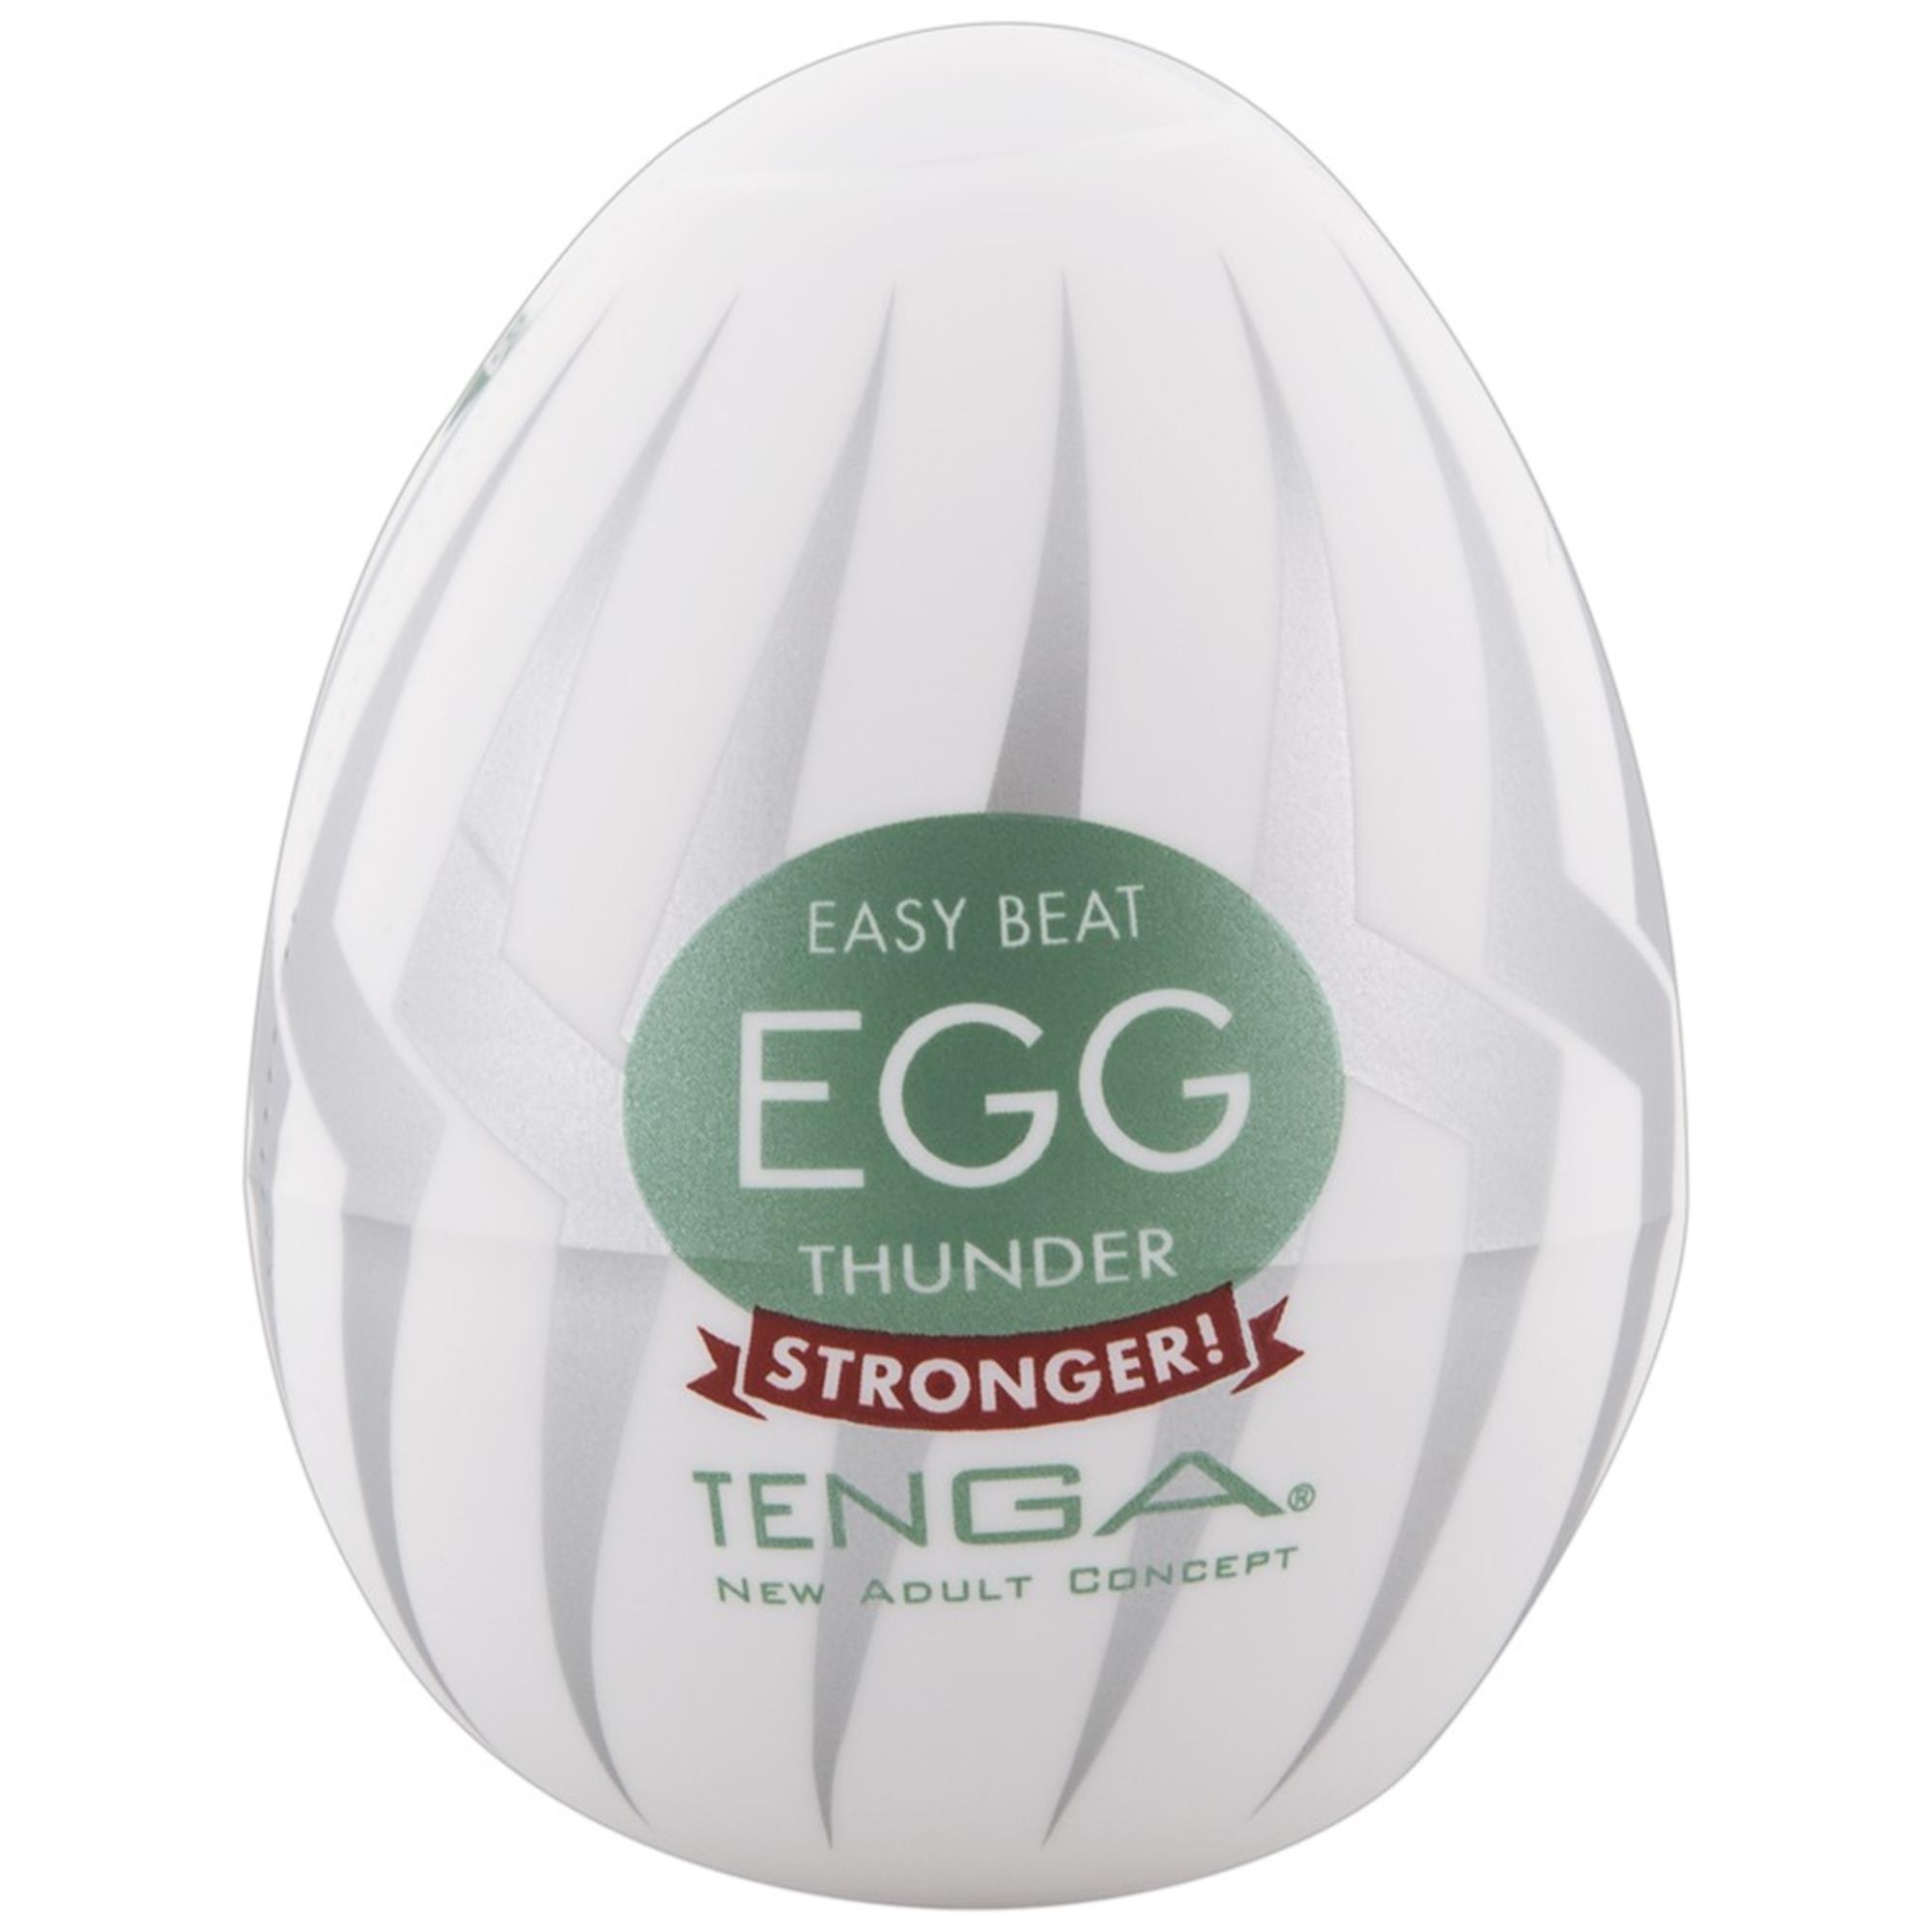 Tenga Egg Thunder | Lösvagina | Intimast